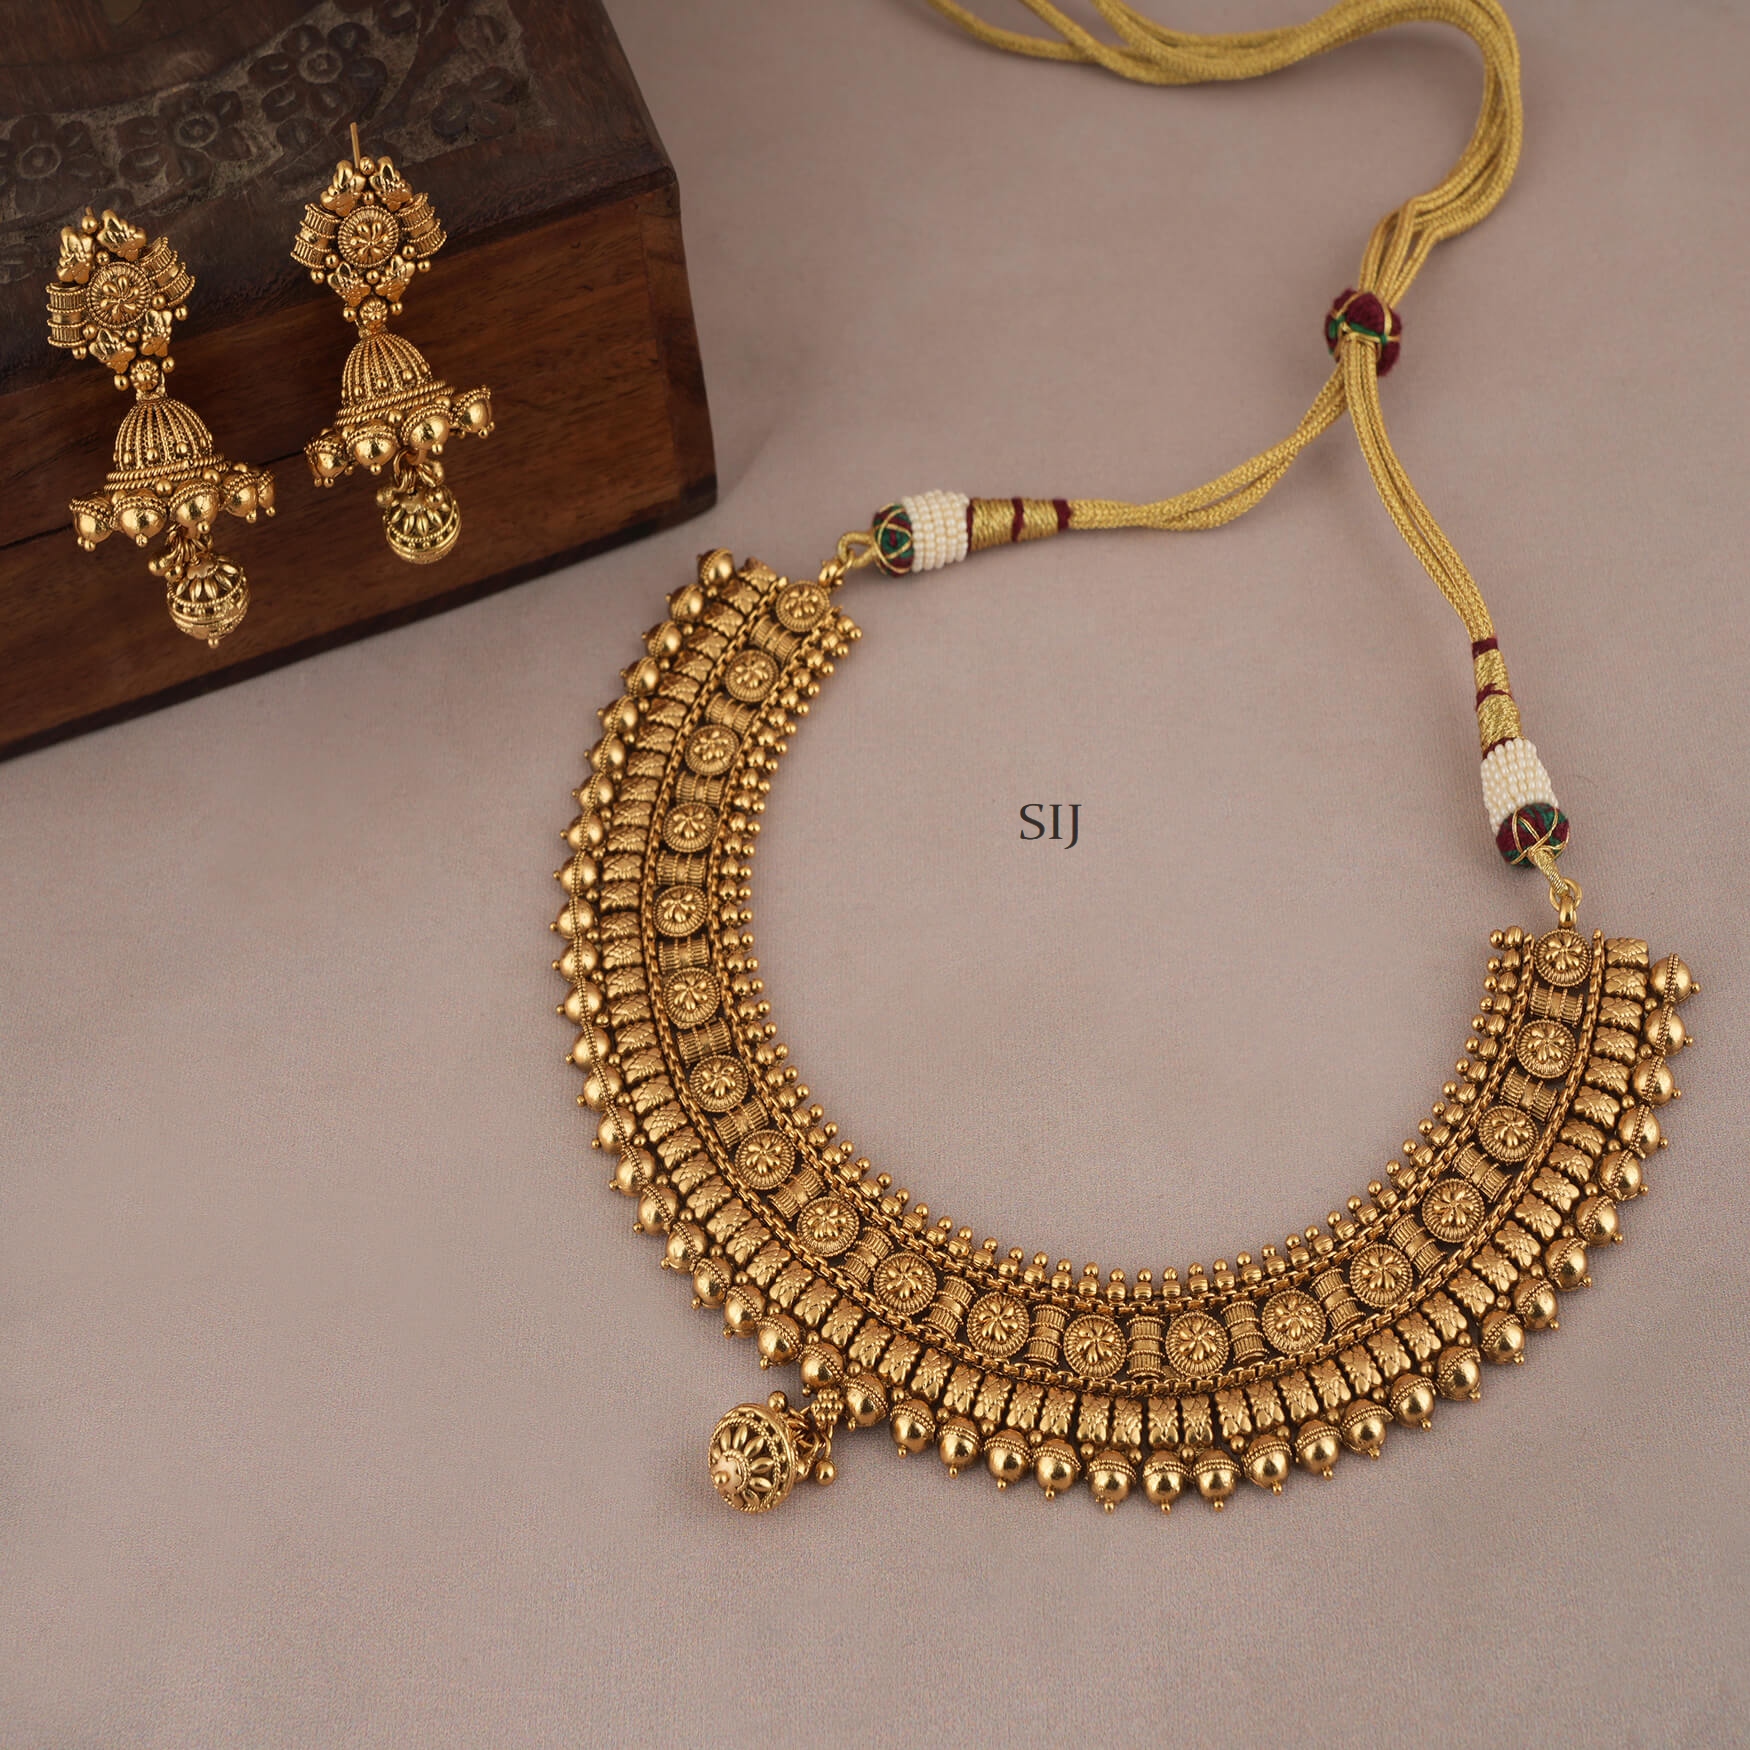 Amazing Gold Finish Necklace with Jhumkas